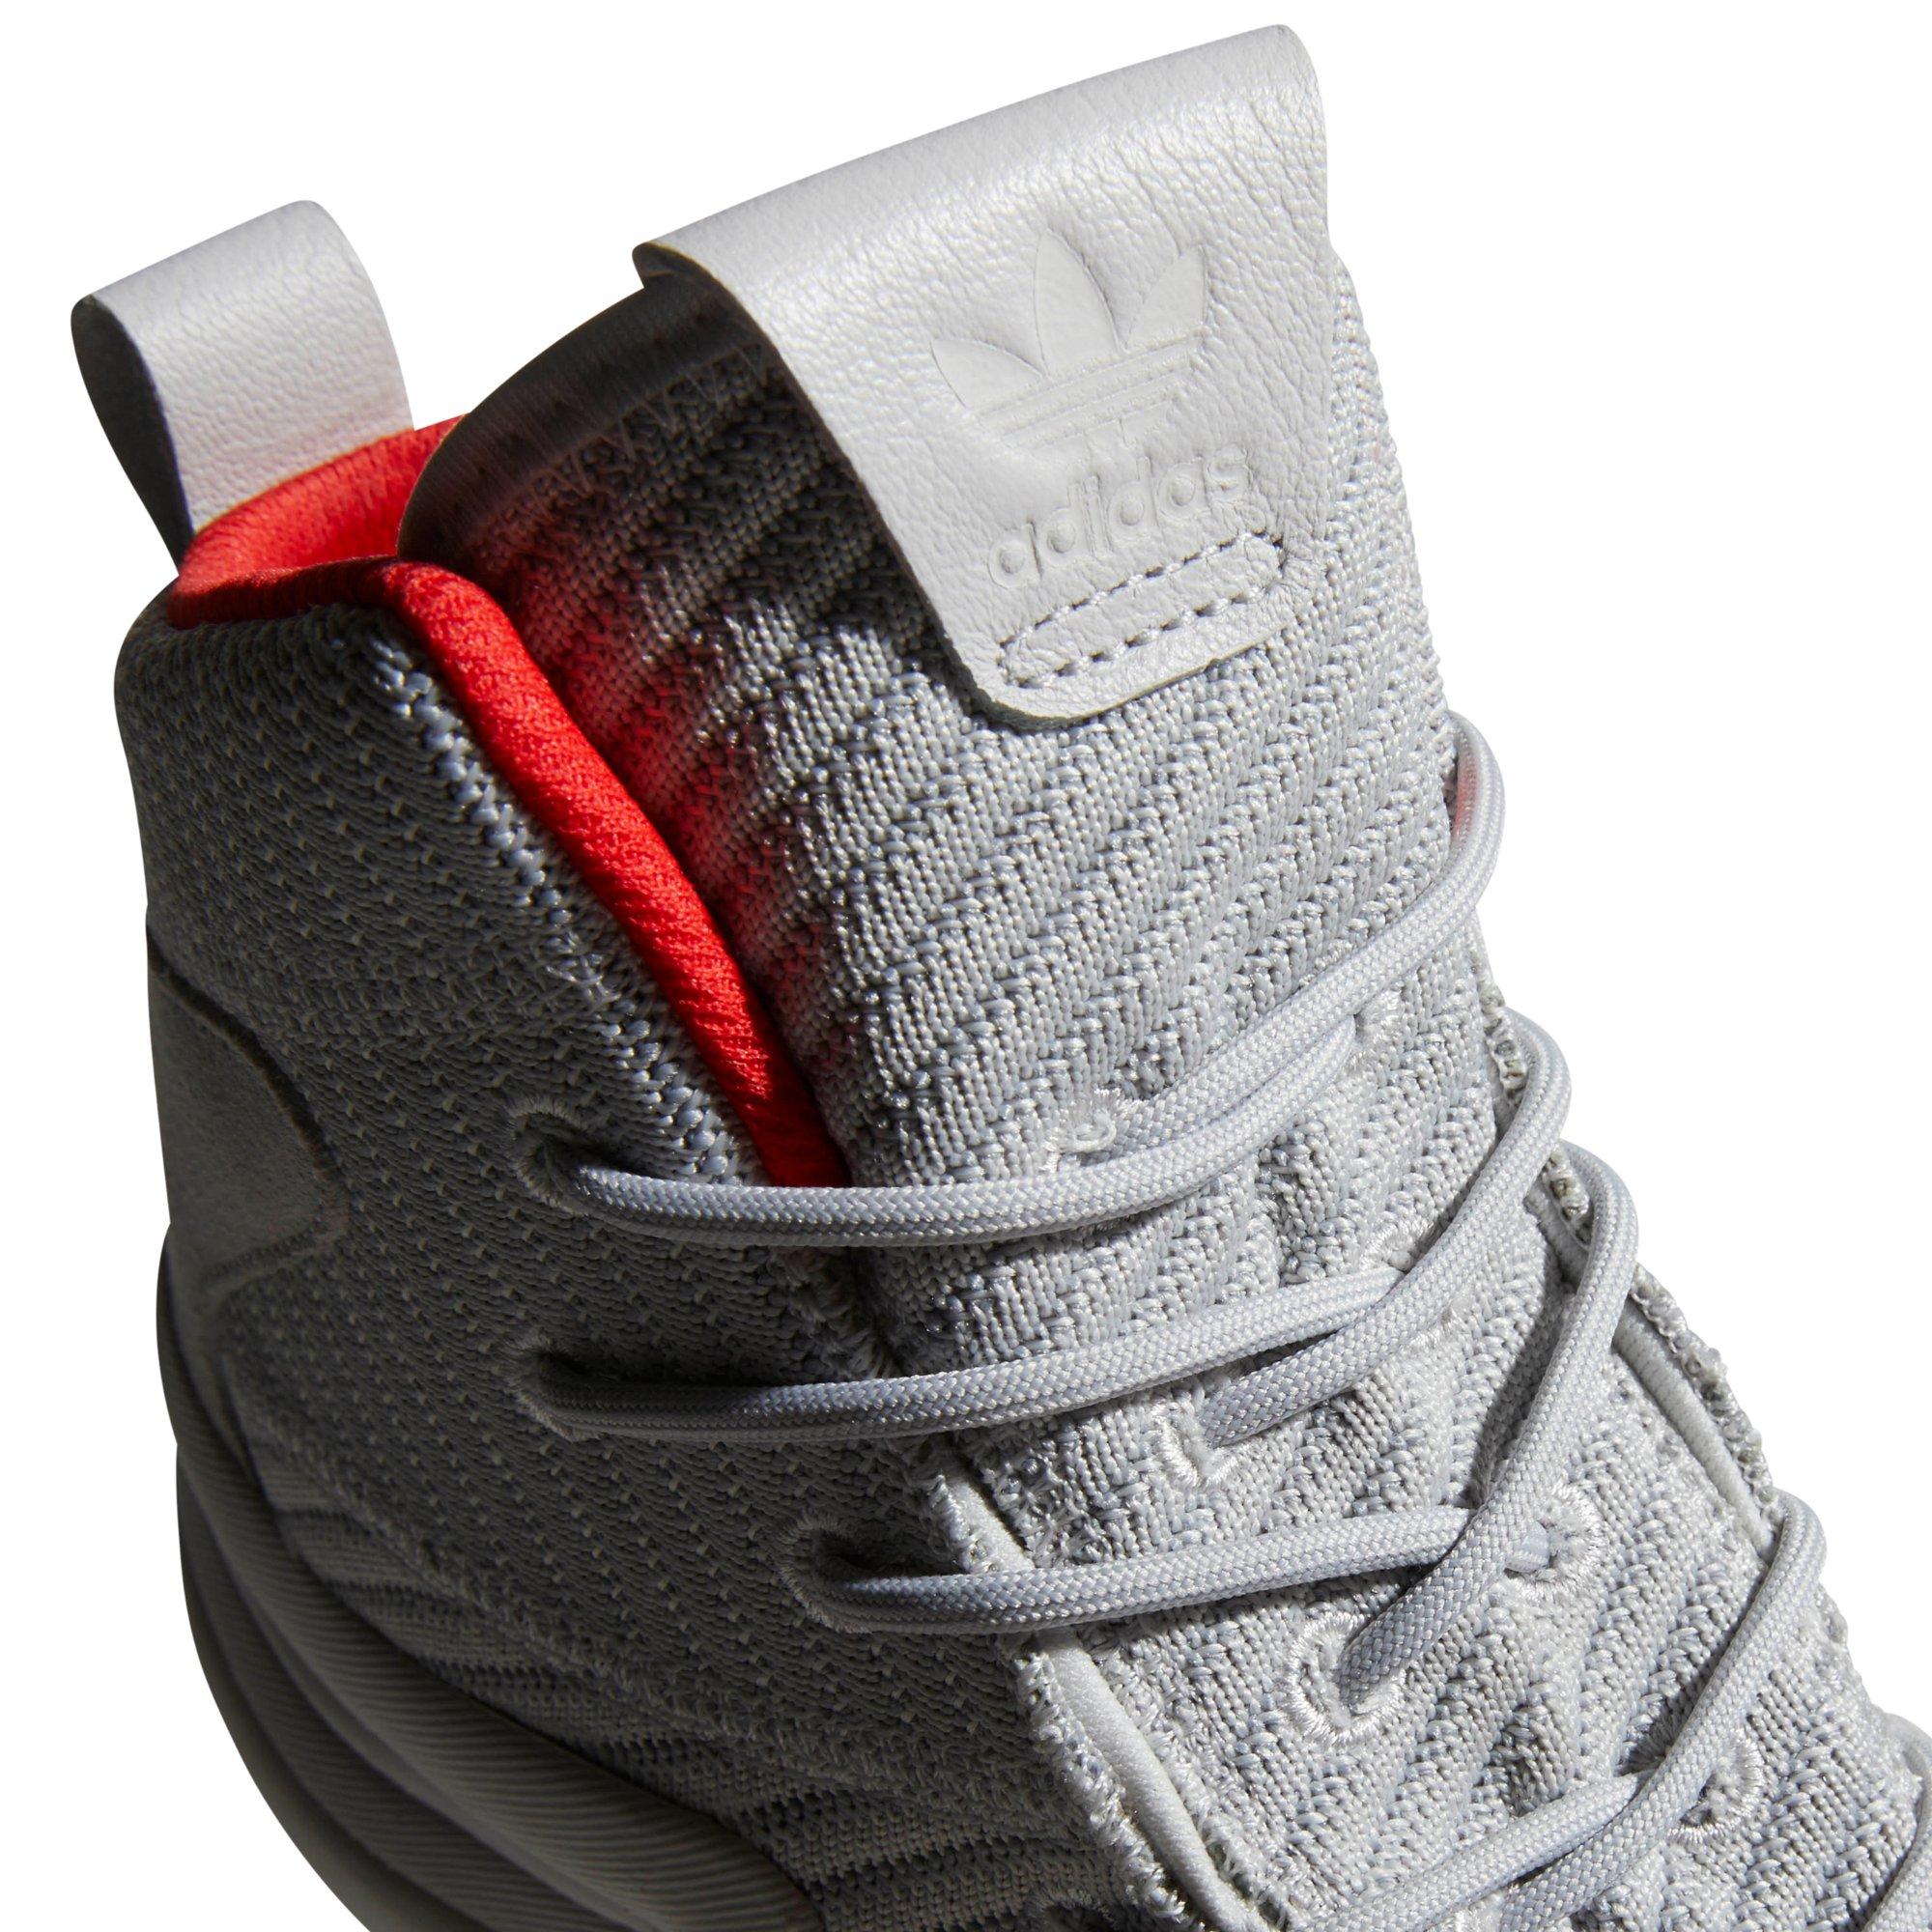 men's adidas crazy 8 adv primeknit basketball shoes